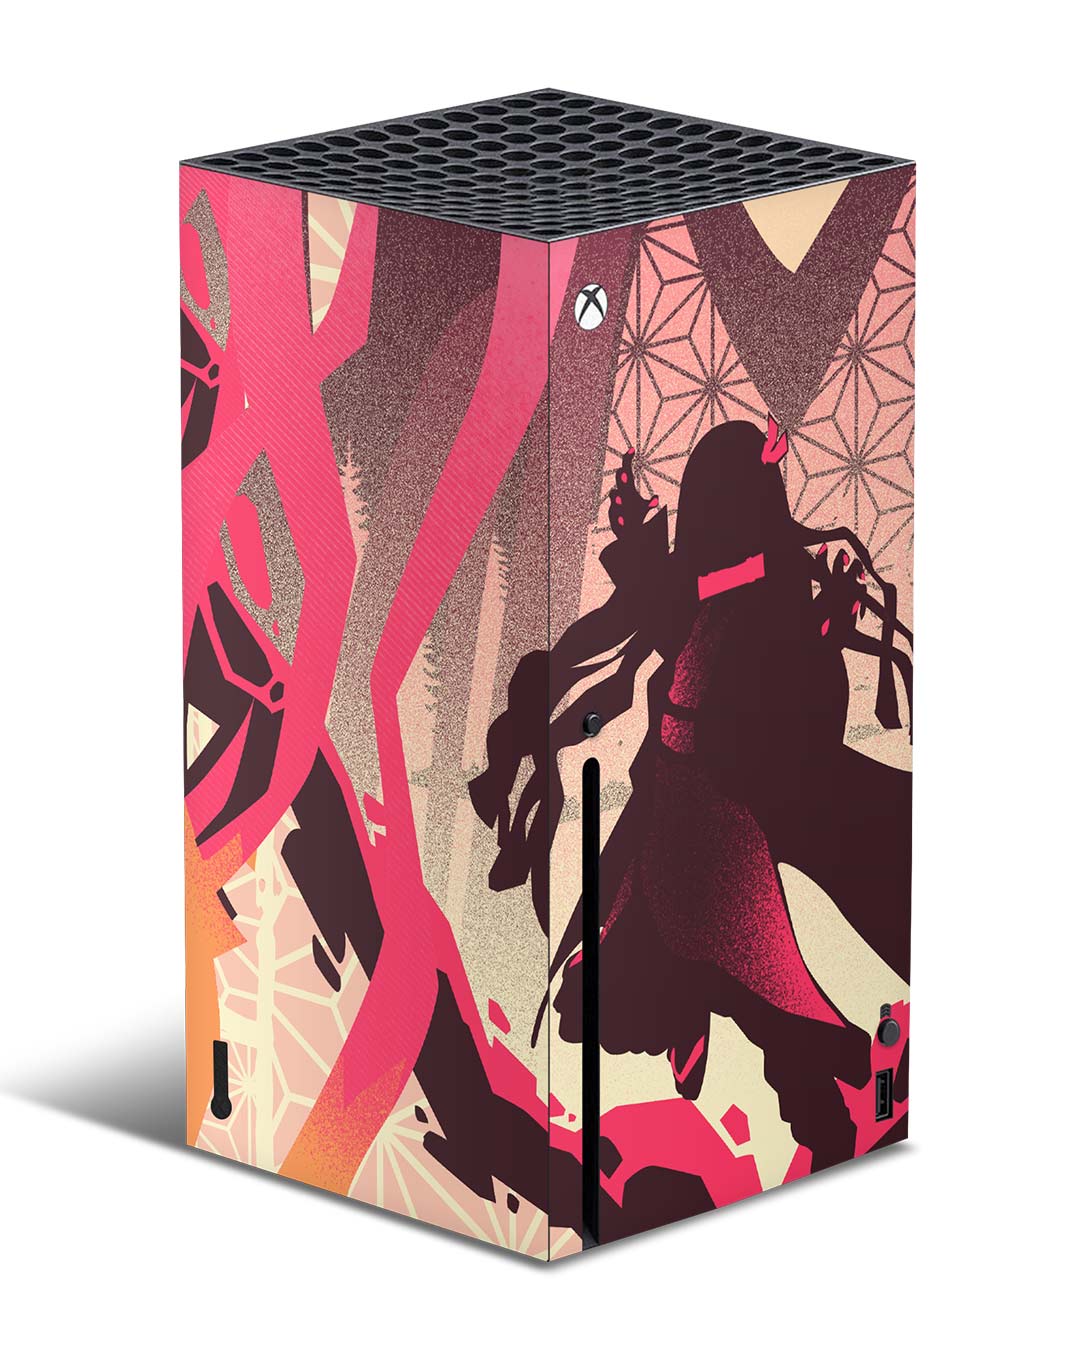 Itachi - Xbox Series X Vinyl Console Skin Wrap Inspired by Naruto